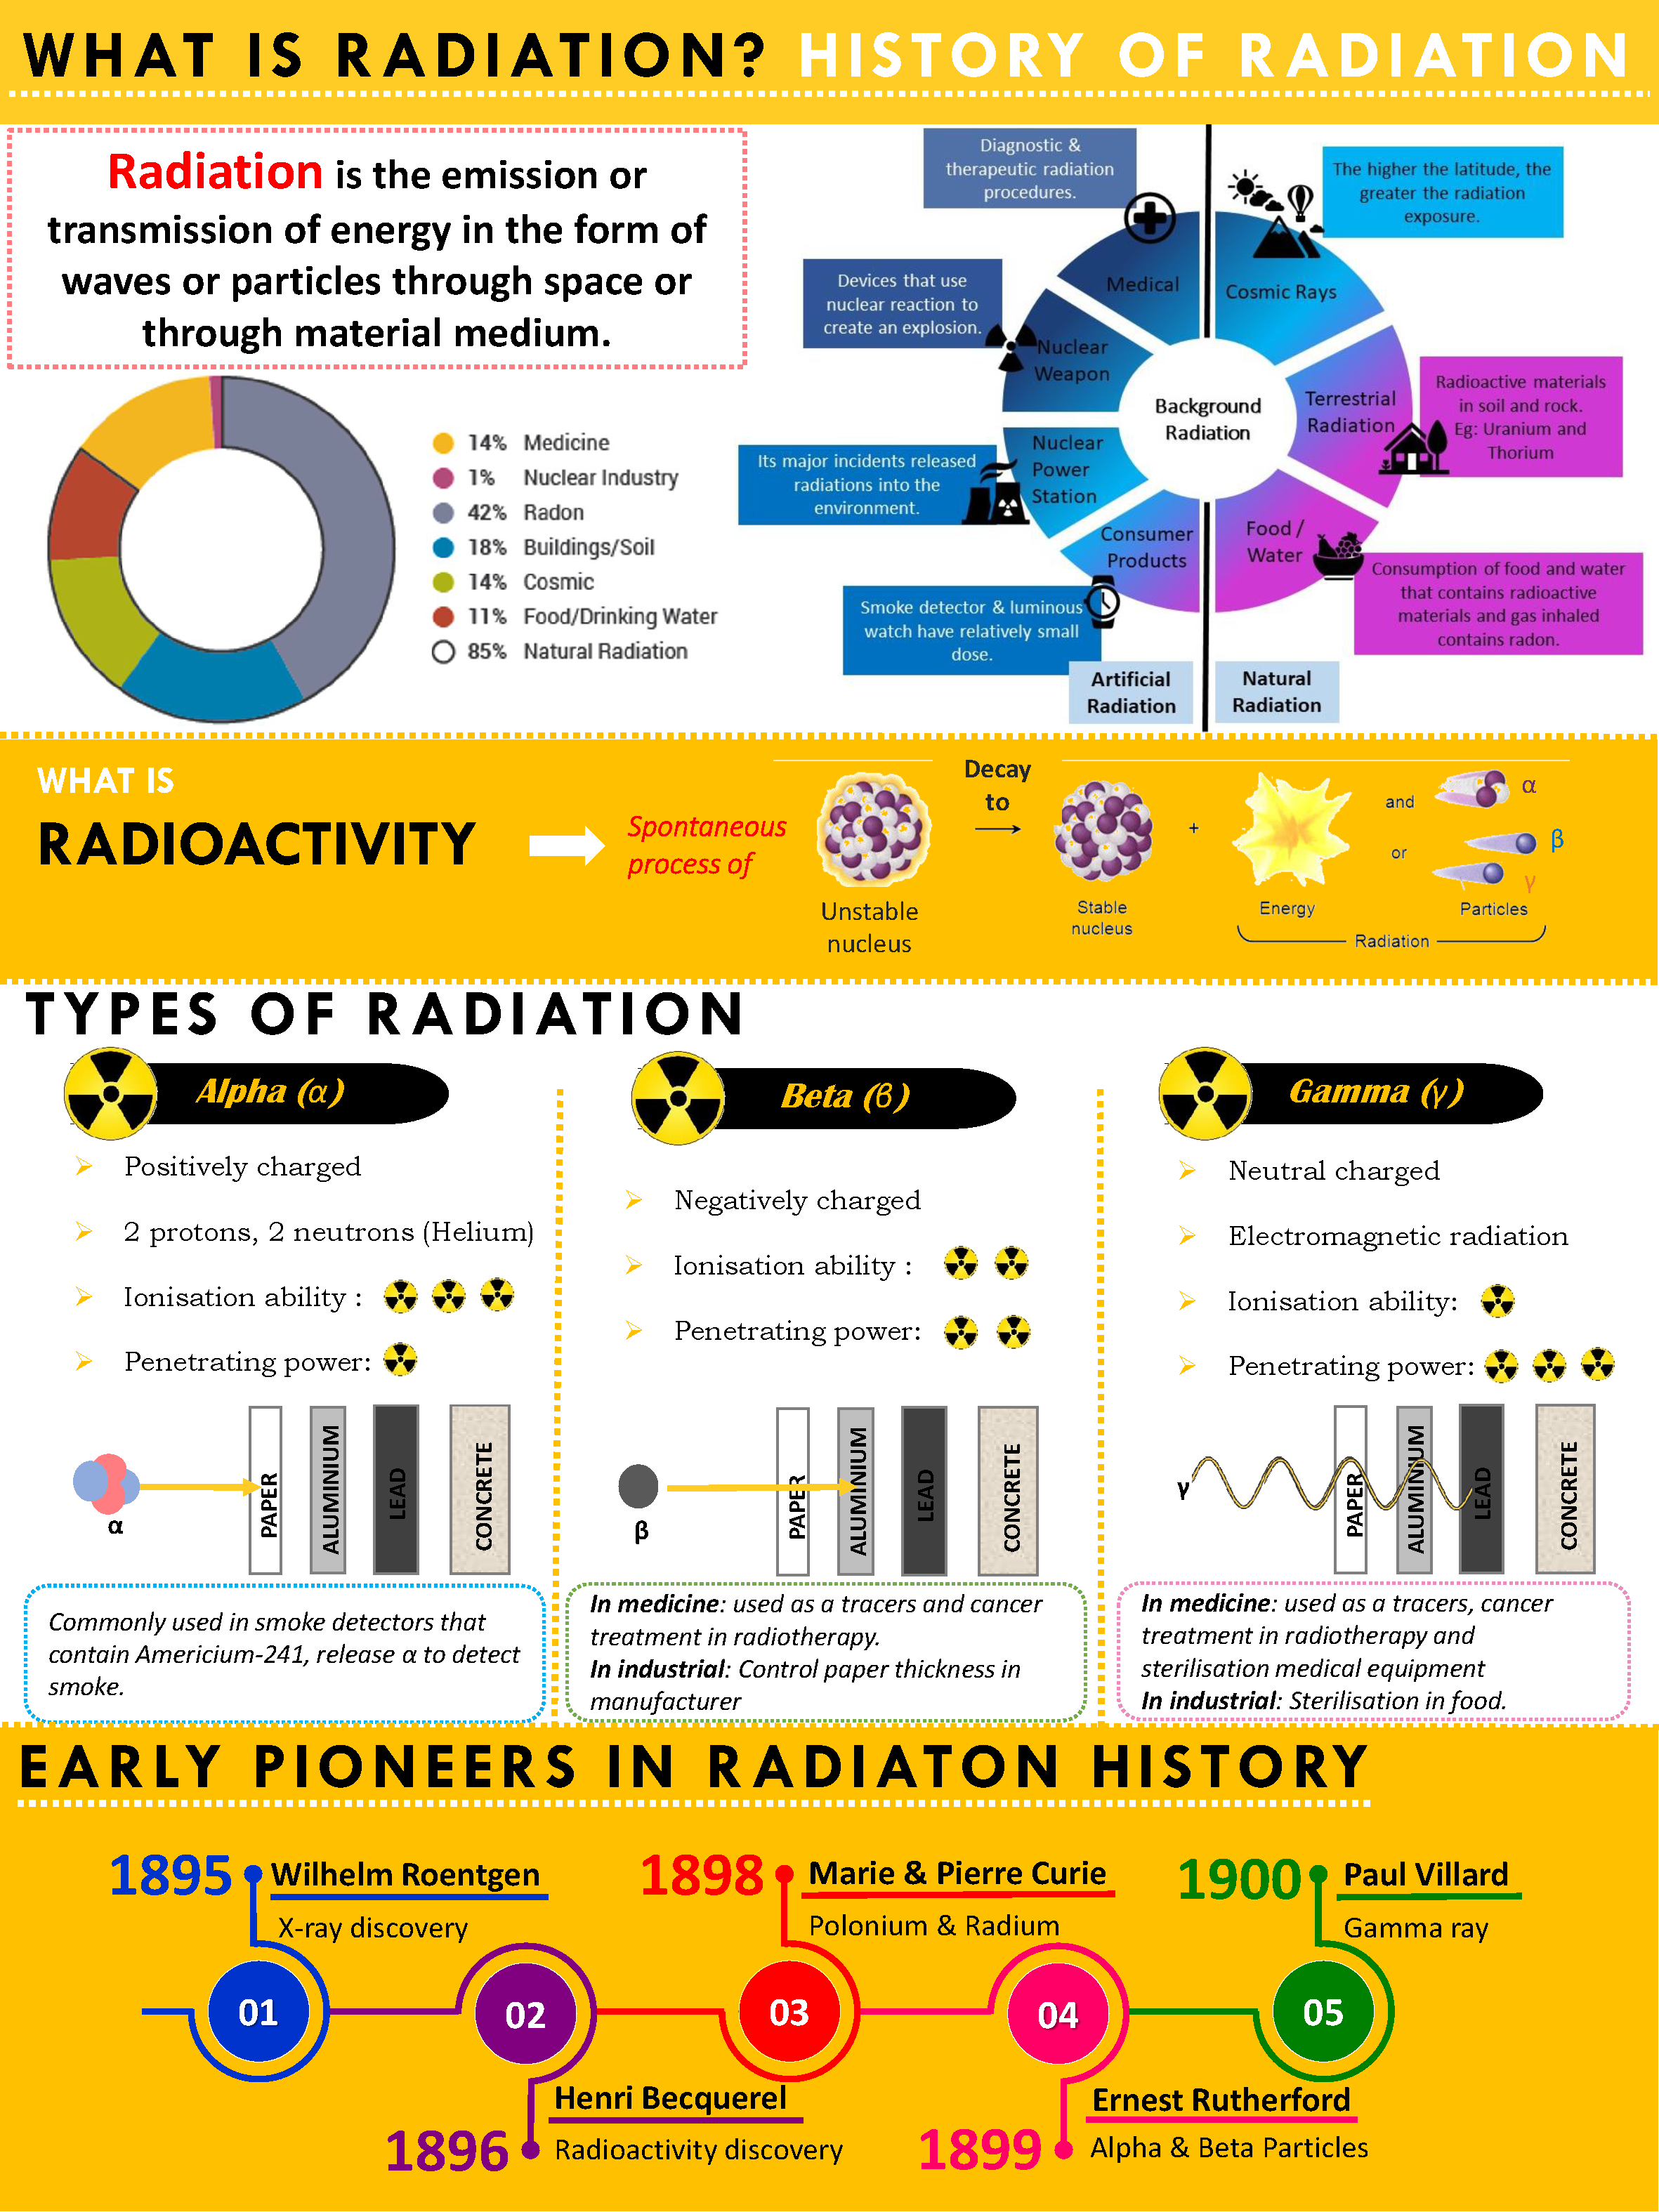 1. History of Radiation